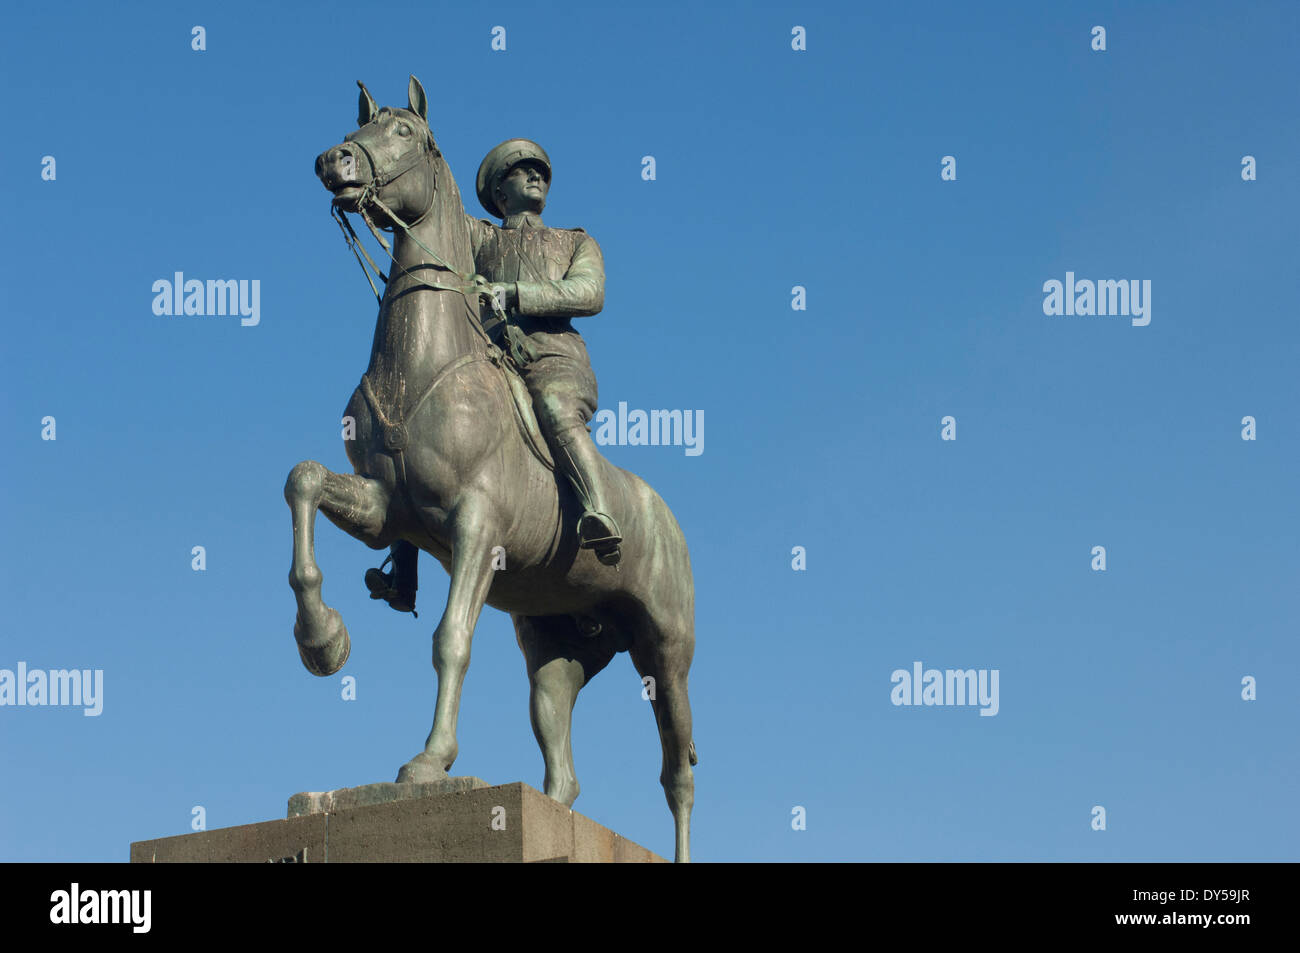 Statue von Mustafa Kemal Atatürk, dem Gründer der modernen Republik Türkei, Izmir, Türkei. Digitale Fotografie Stockfoto